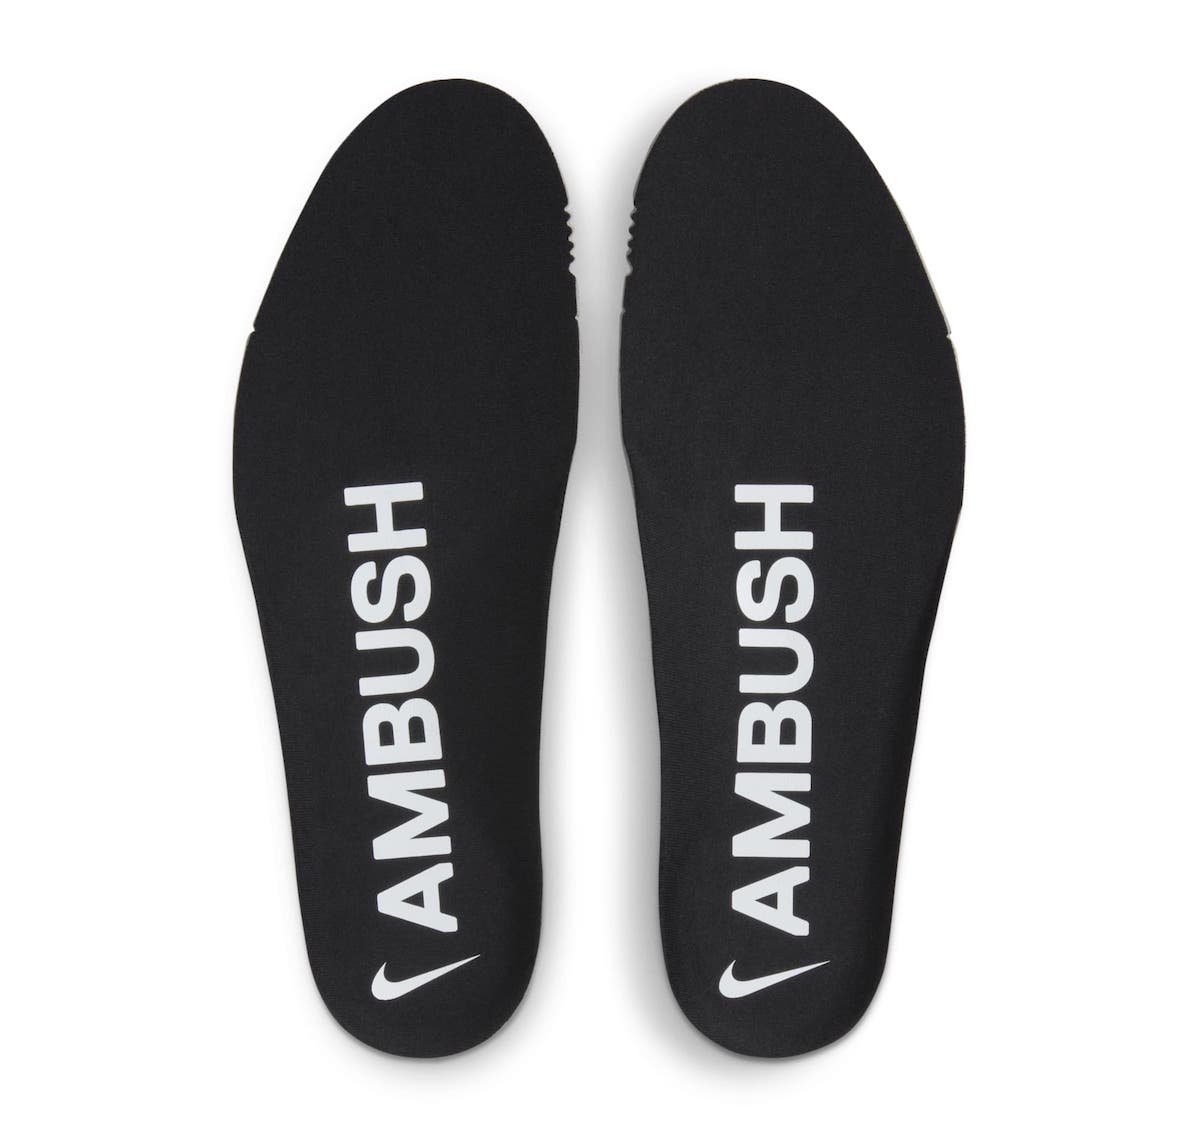 AMBUSH Nike Air More Uptempo Low Black White FB1299 001 Release Date 9